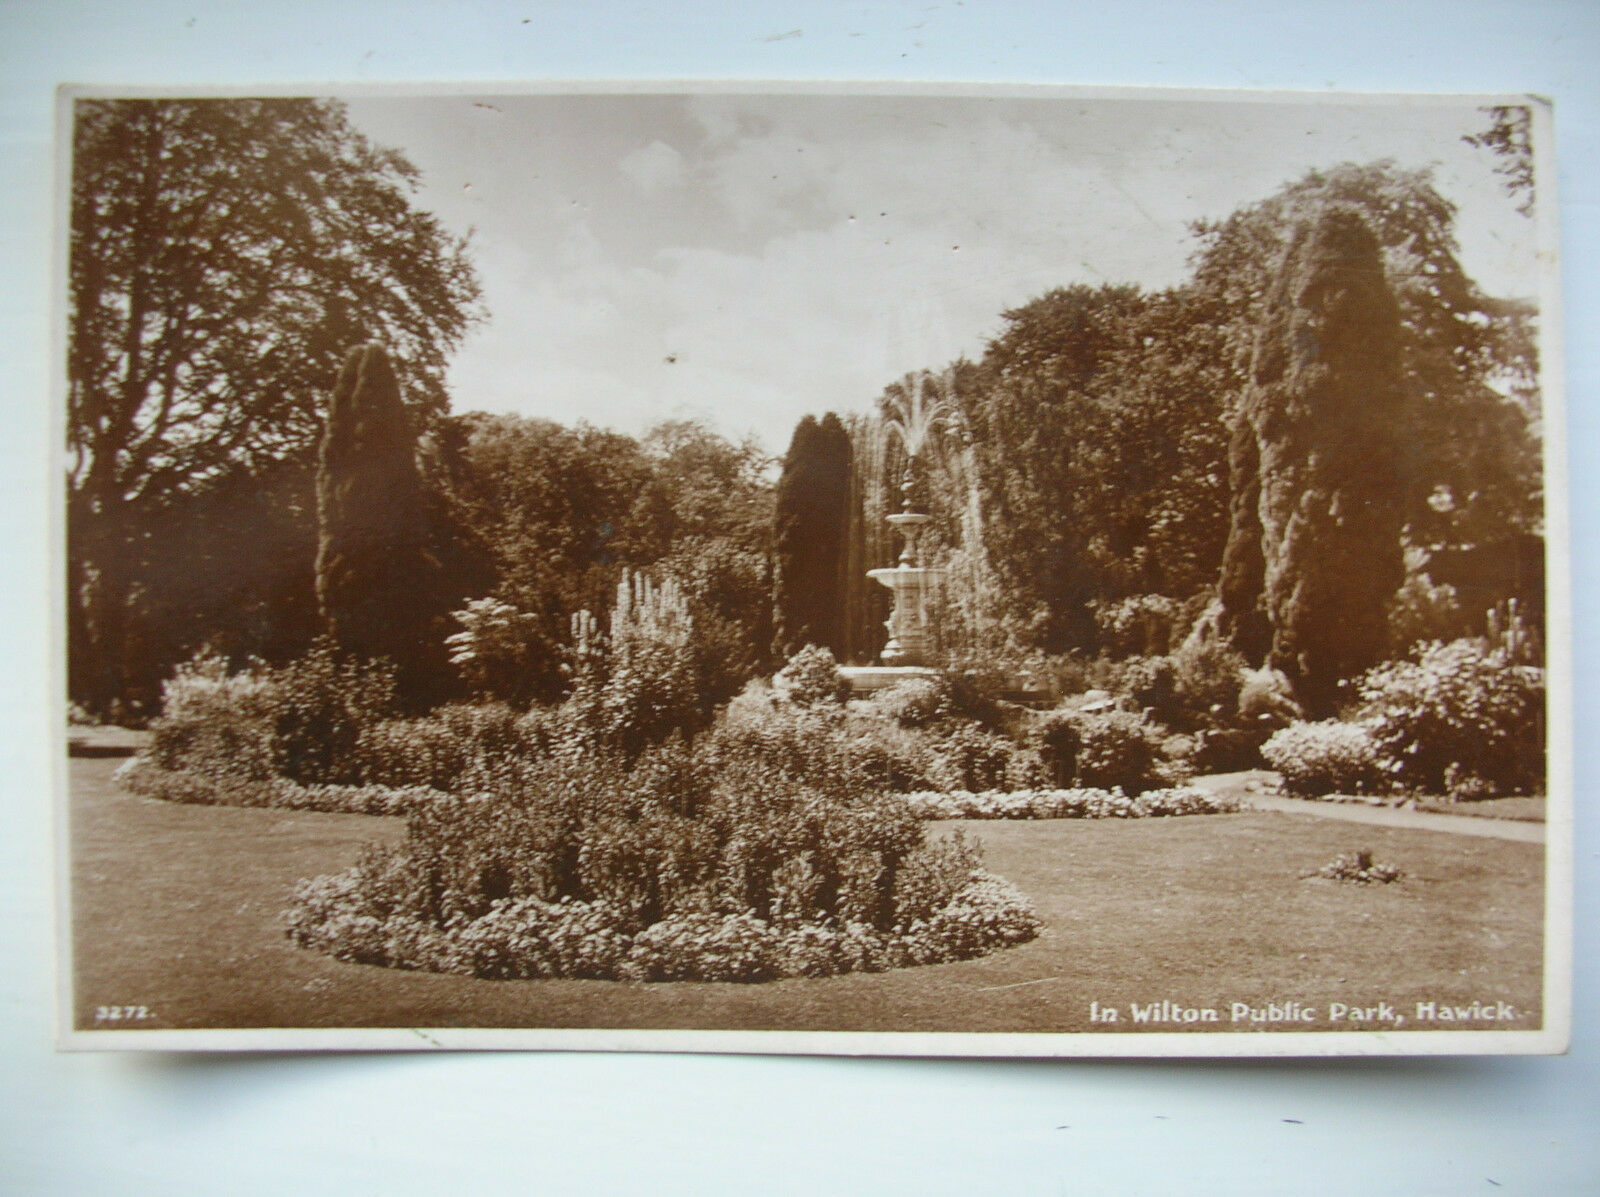 House Clearance - Hawick – Wilton Public Park. (A R Edwards & Son, Selkirk)